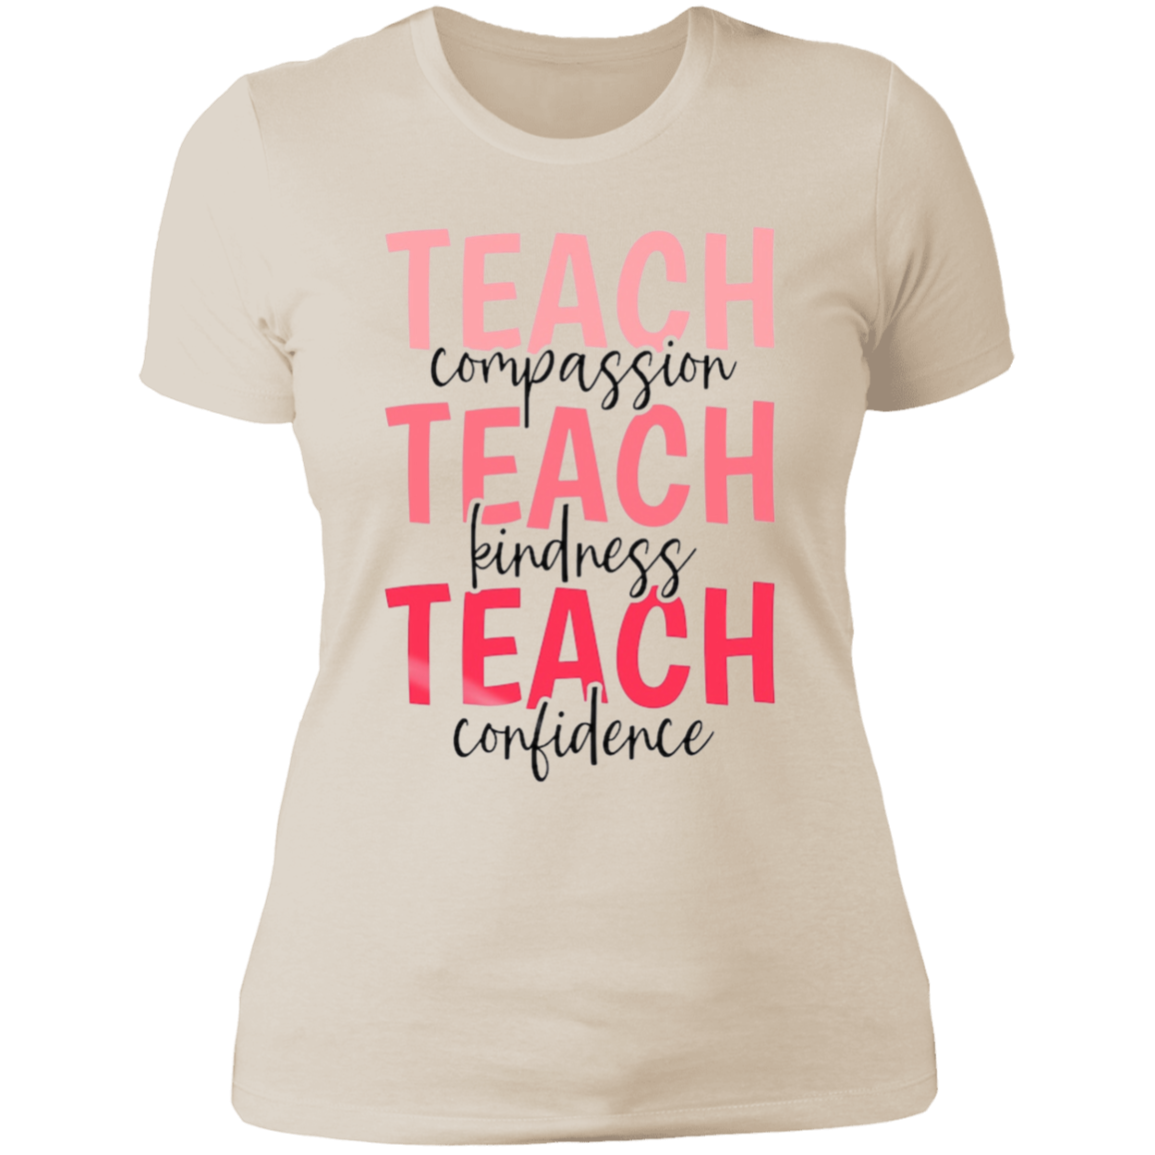 Teach, Compassion, Kindness, Confident Tee